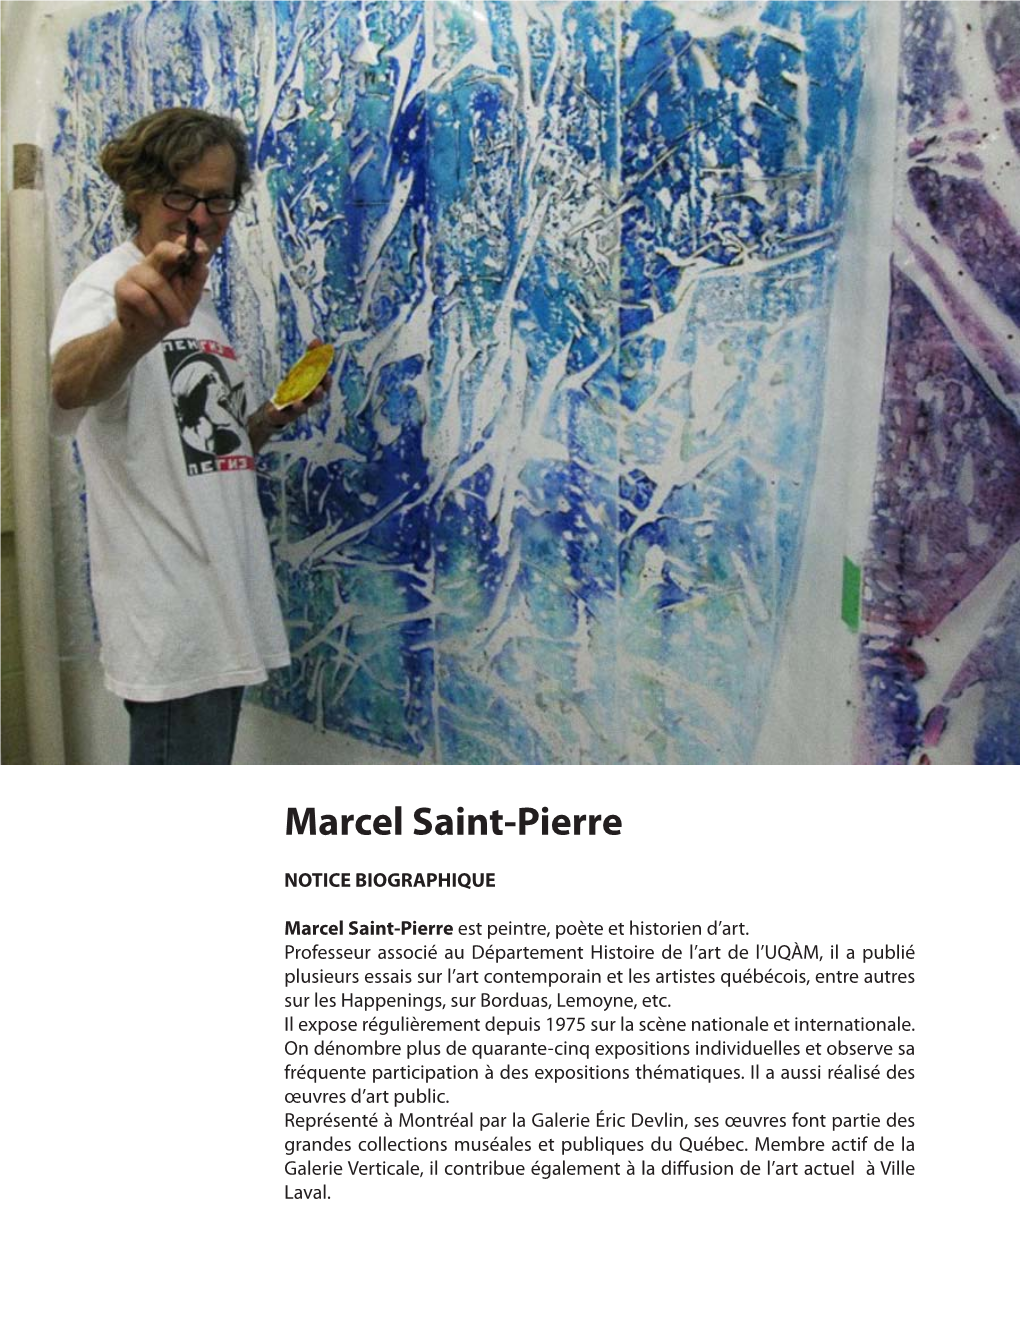 Marcel Saint-Pierre